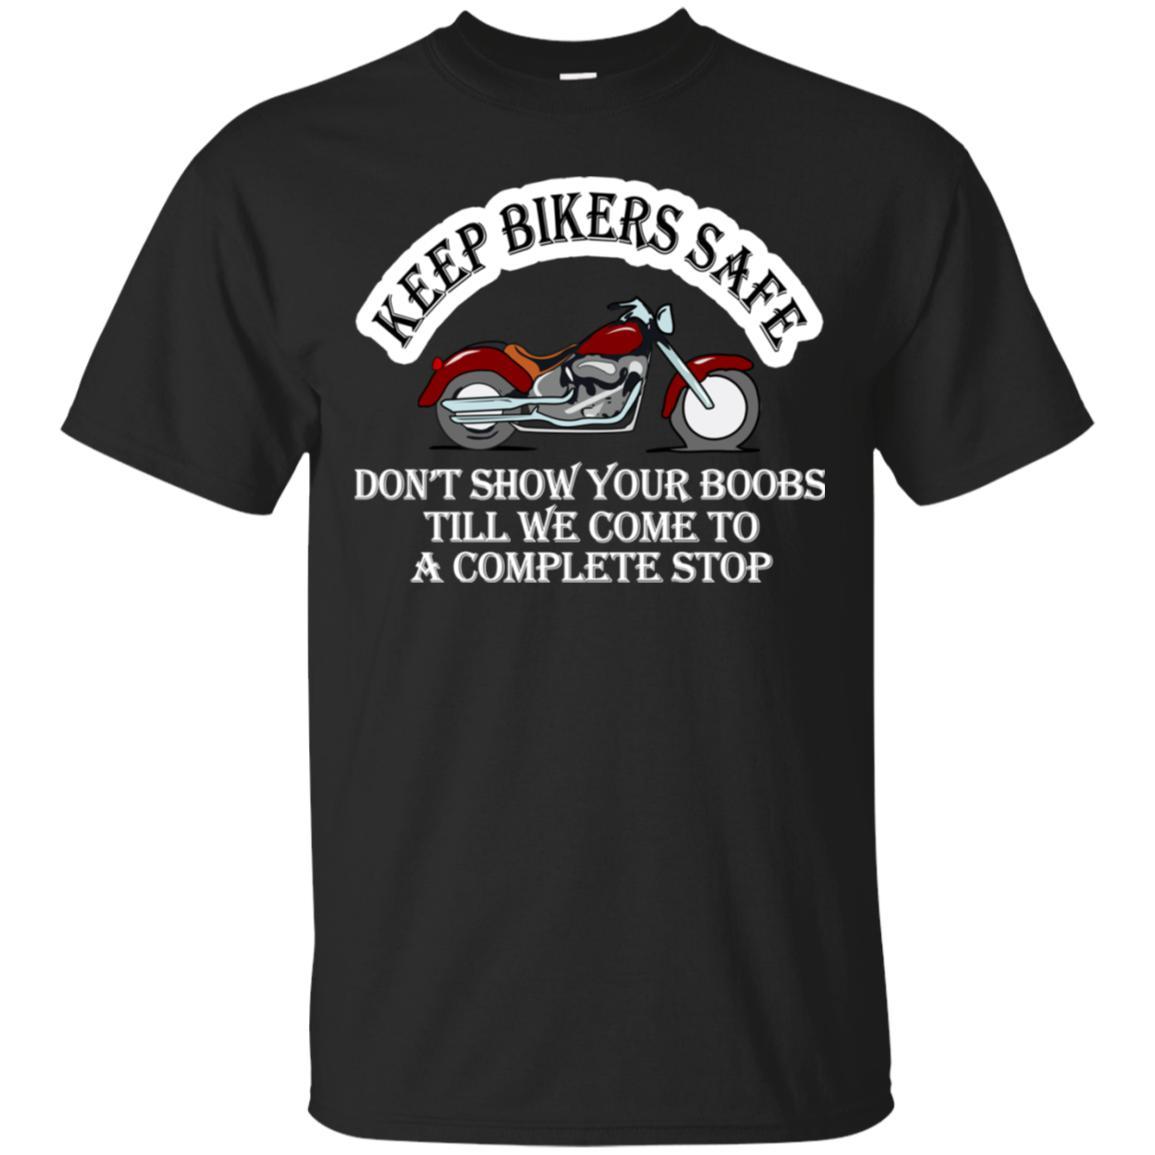 Keep Bikers Safe Motorcycle Shirt